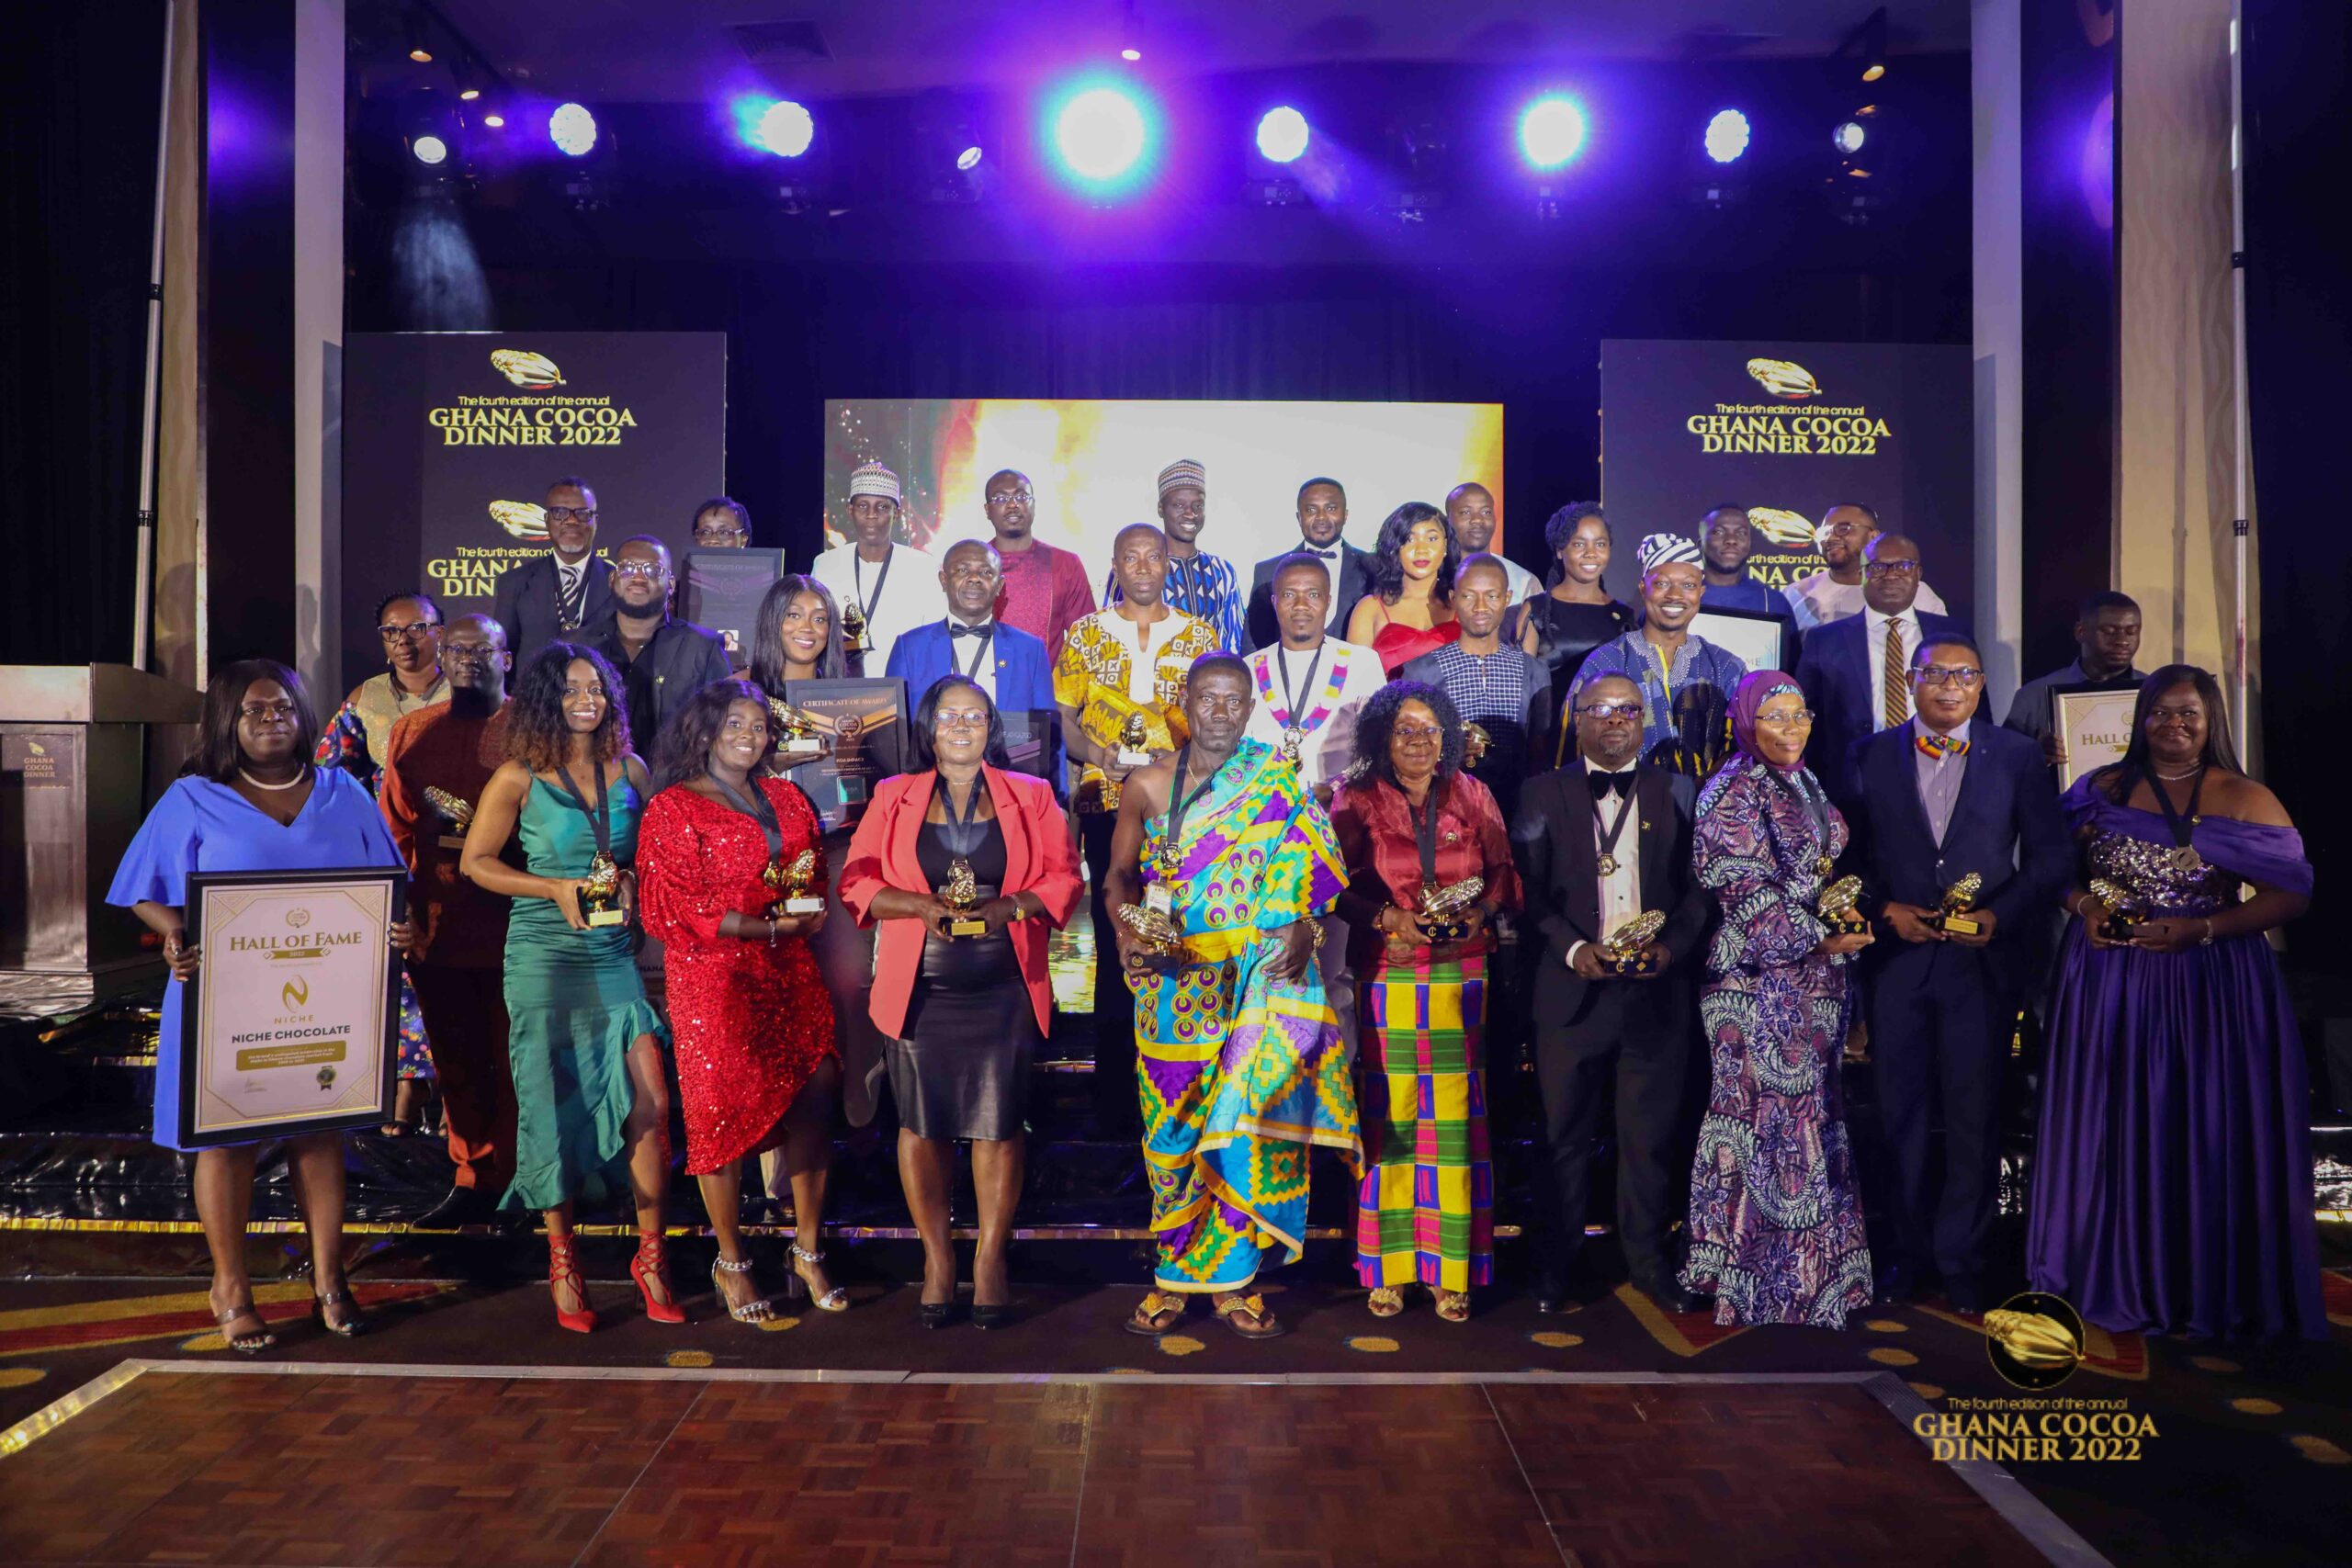 Cocoa Dinner 2022, Kwame Owusu-Ansah, Ghana Cocoa Awards, Ghana Cocoa Dinner, CHED, COCOBOD, Ghana Cocoa Board, Outstanding Achievement Award, Cocoa rehabilitation,